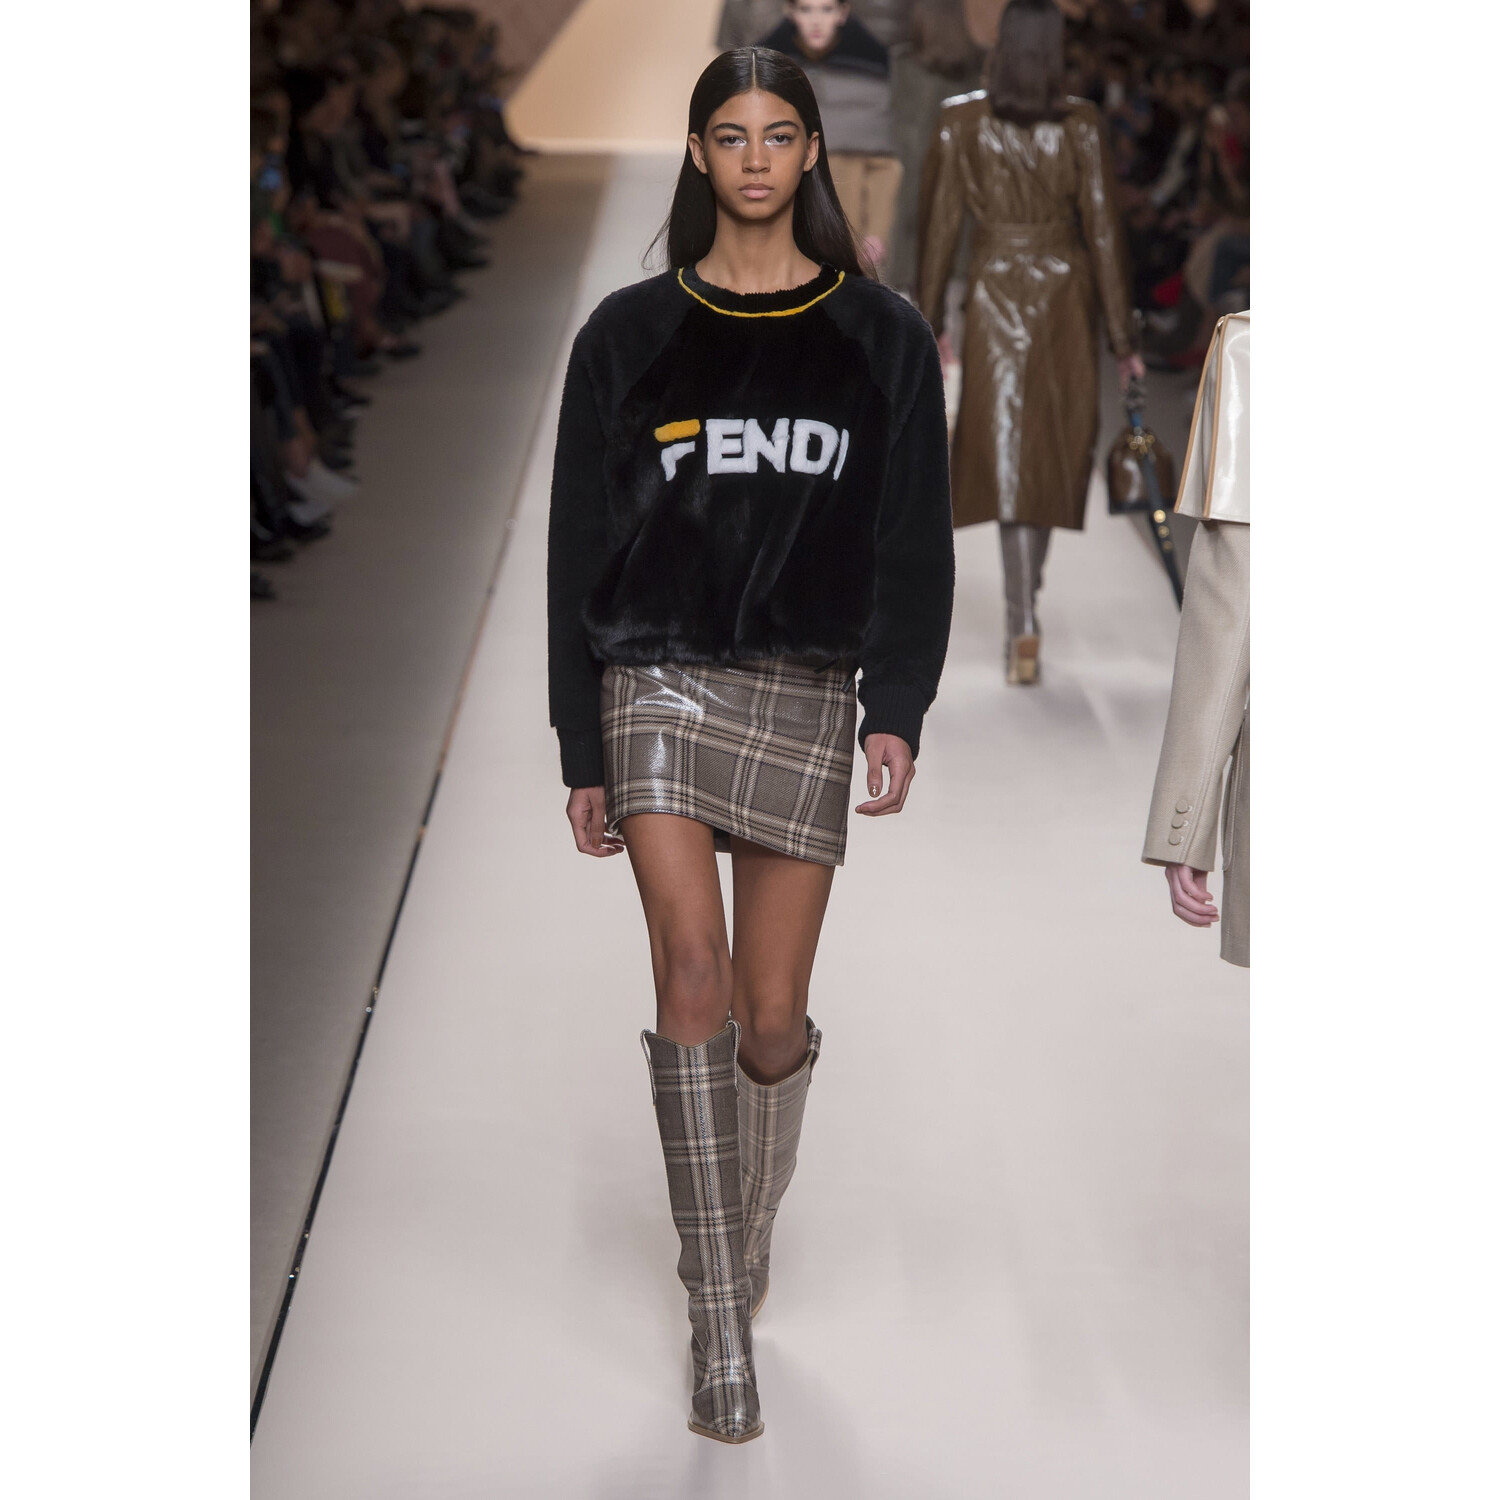 Фото Fendi Fall 2018 Ready-to-Wear , Фенди осень зима 2018 , Fashion show , неделя моды в Милане , MFW , Mainstyles